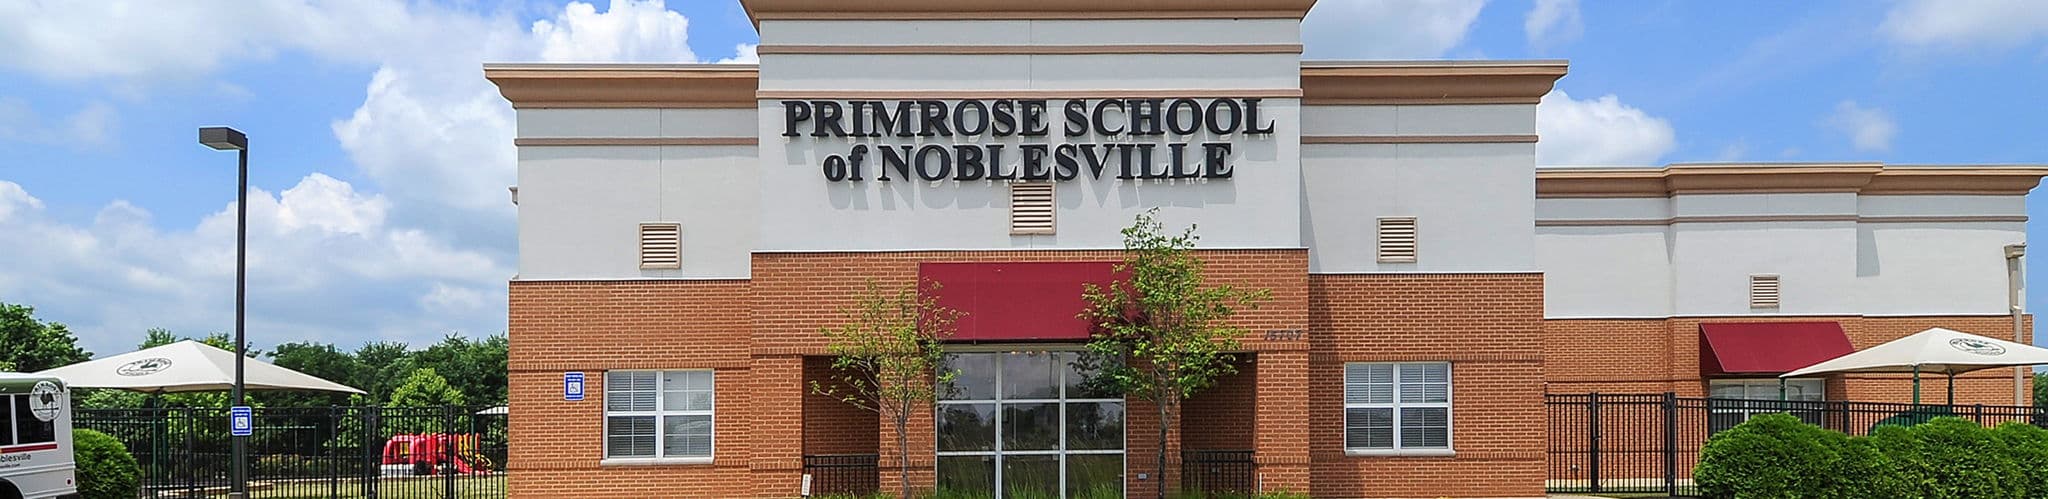 Exterior of a Primrose School of Noblesville